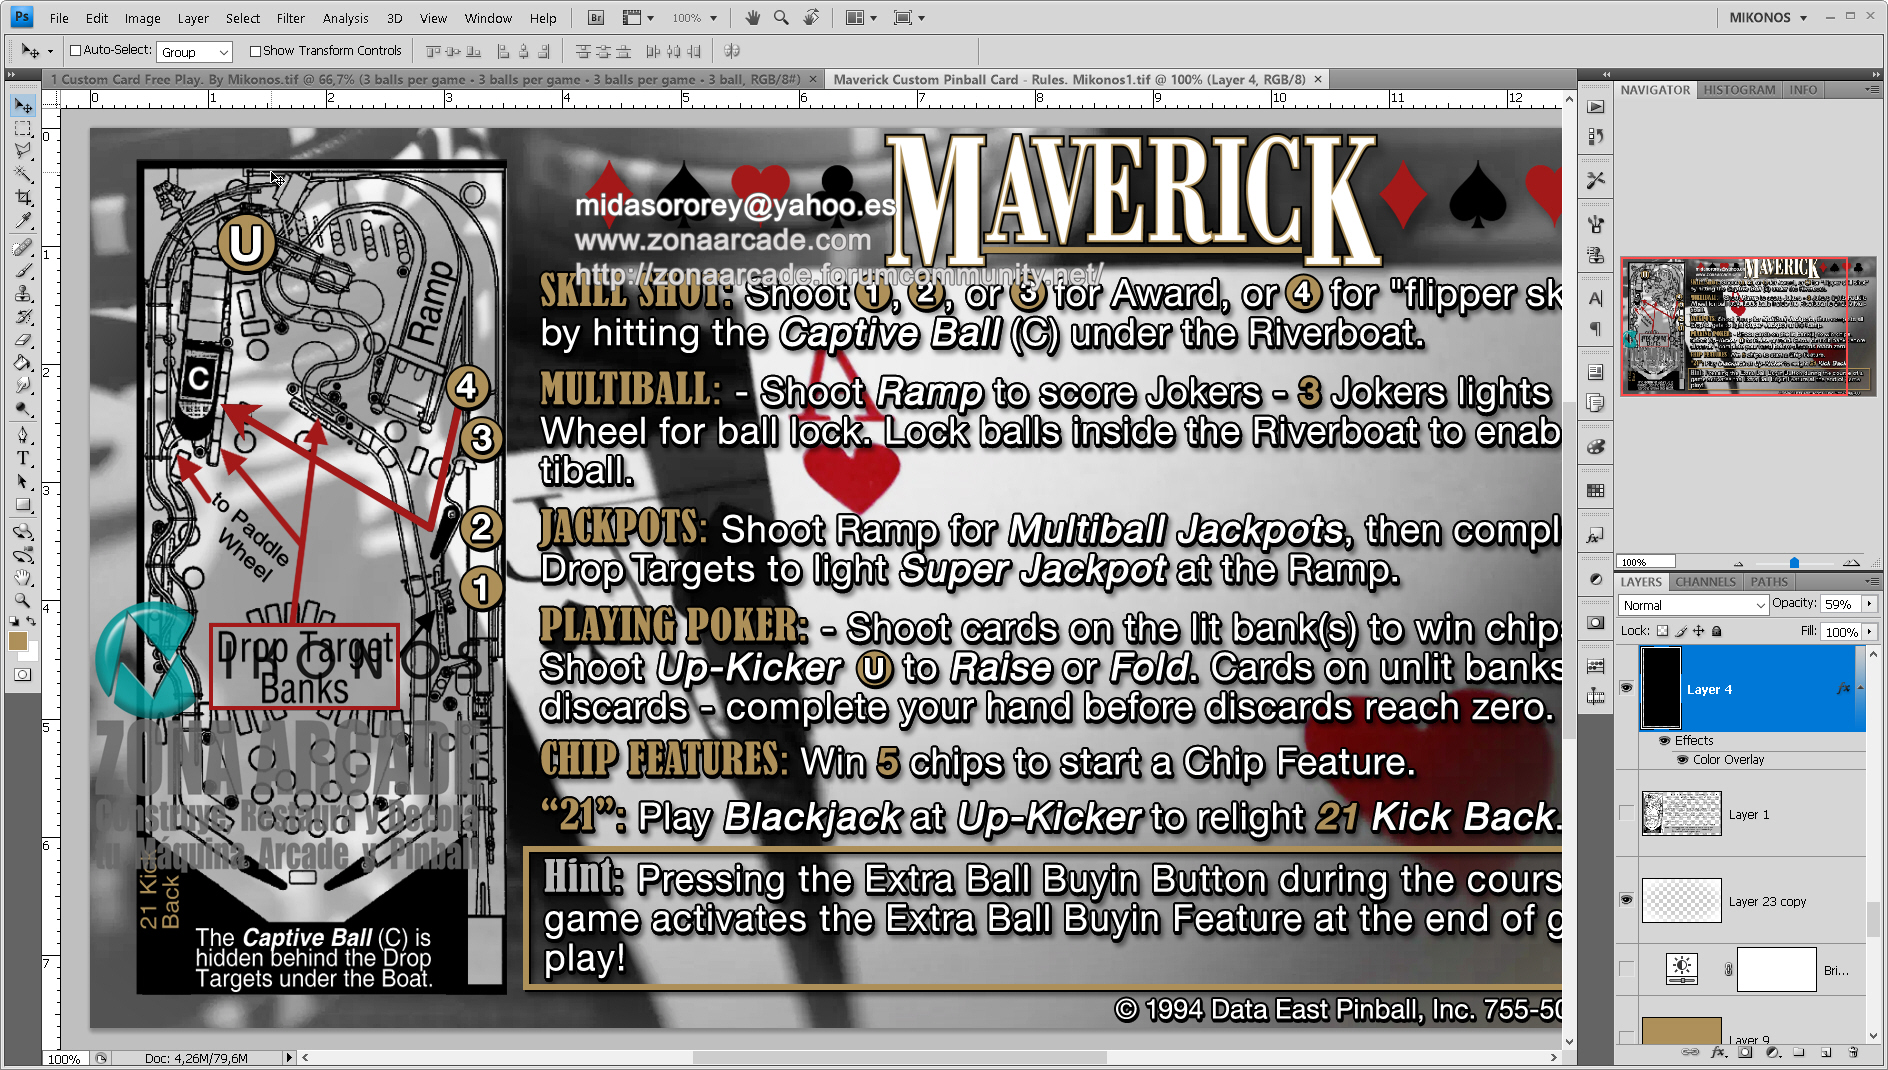 Maverick Custom Pinball Card - Rules. Mikonos2